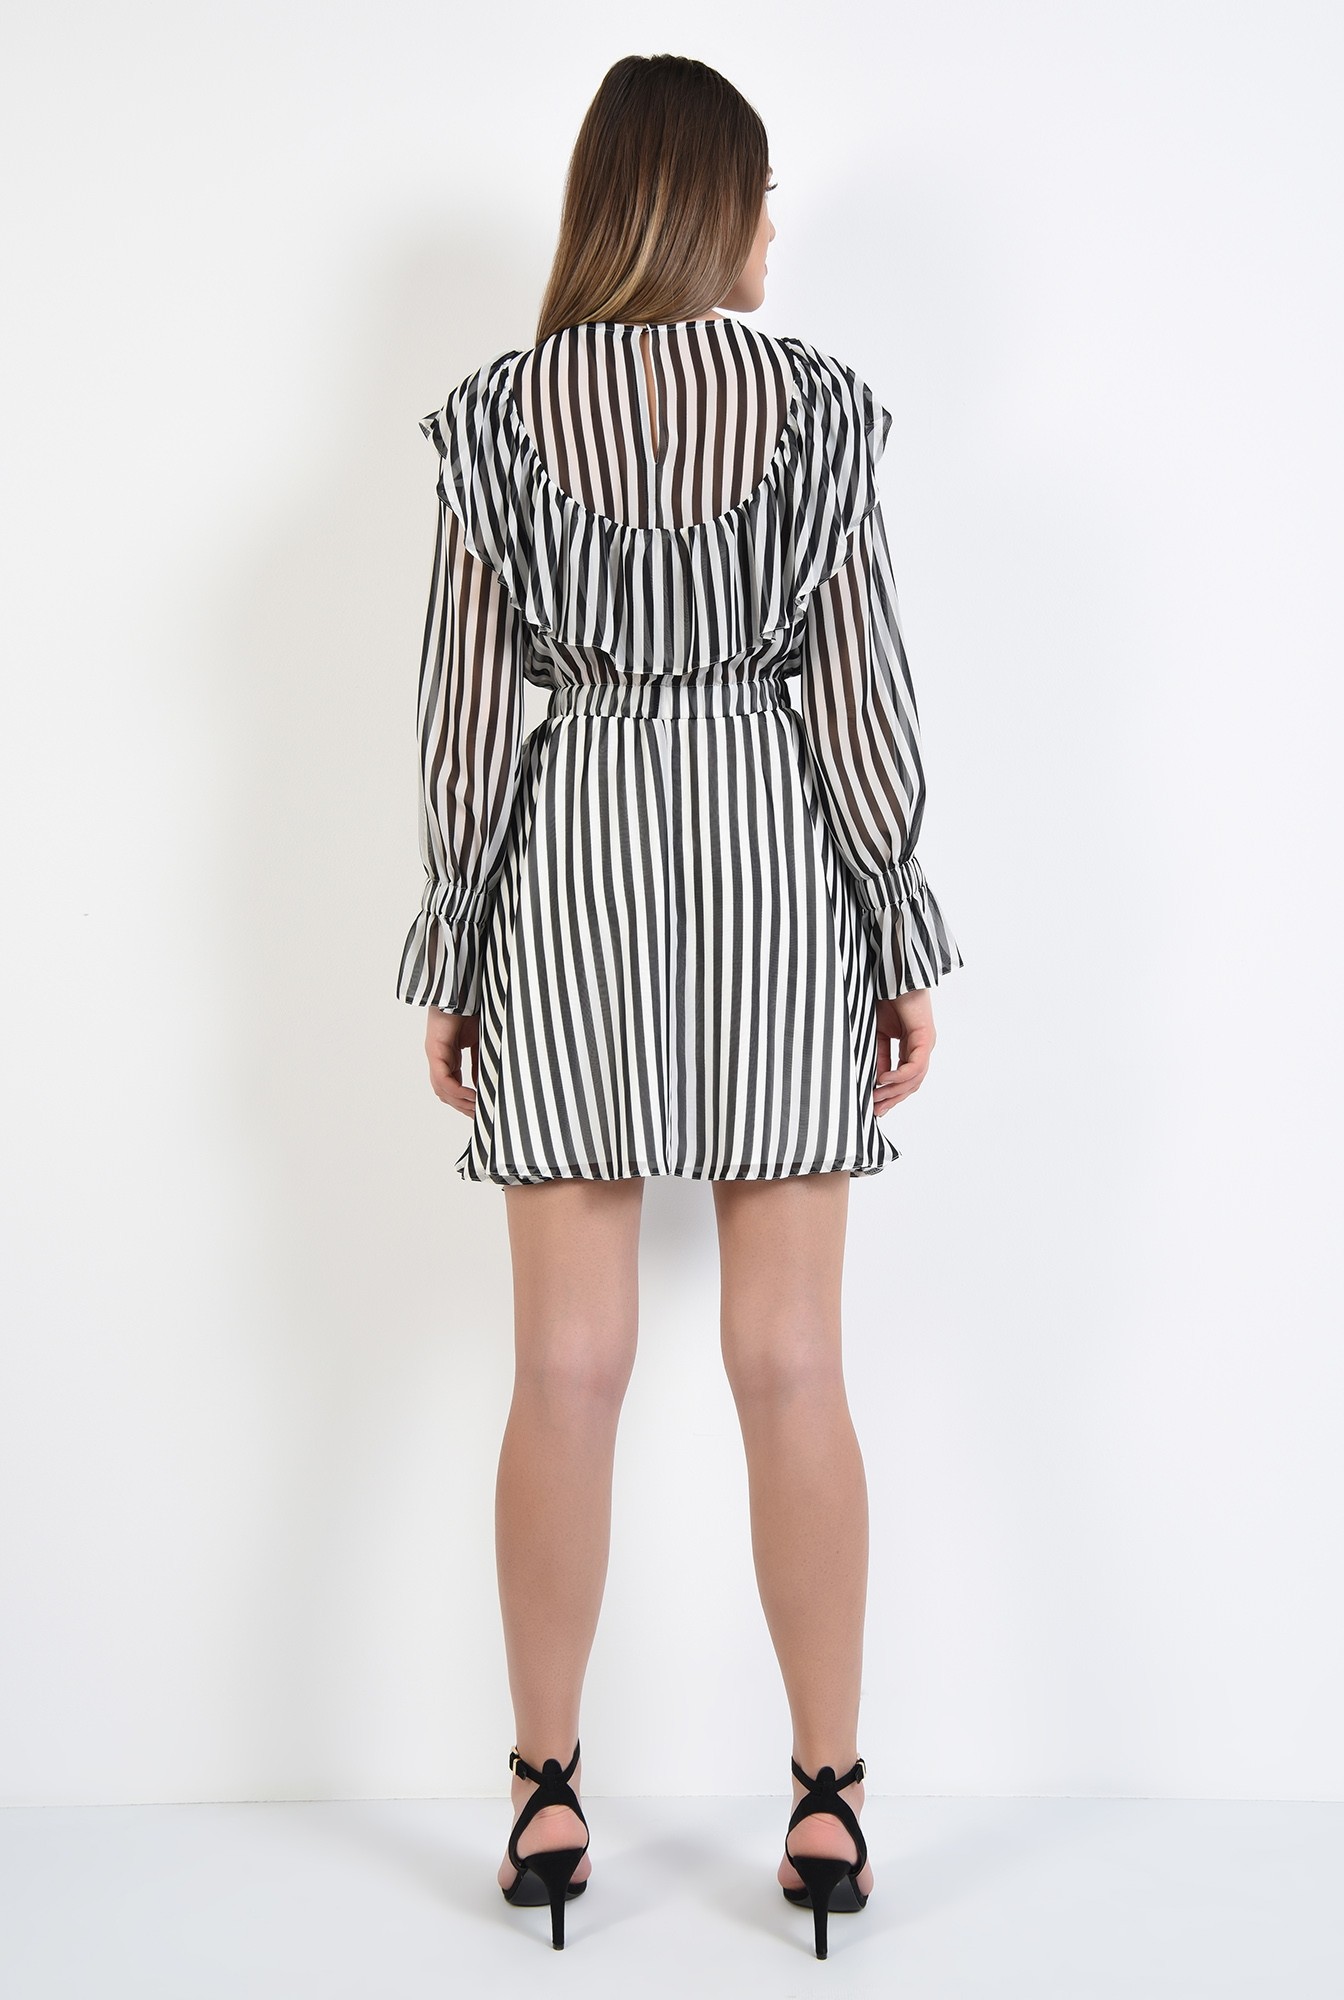 1 - 360 - rochie mini, cu dungi, alb-negru, talie pe elastic, volan